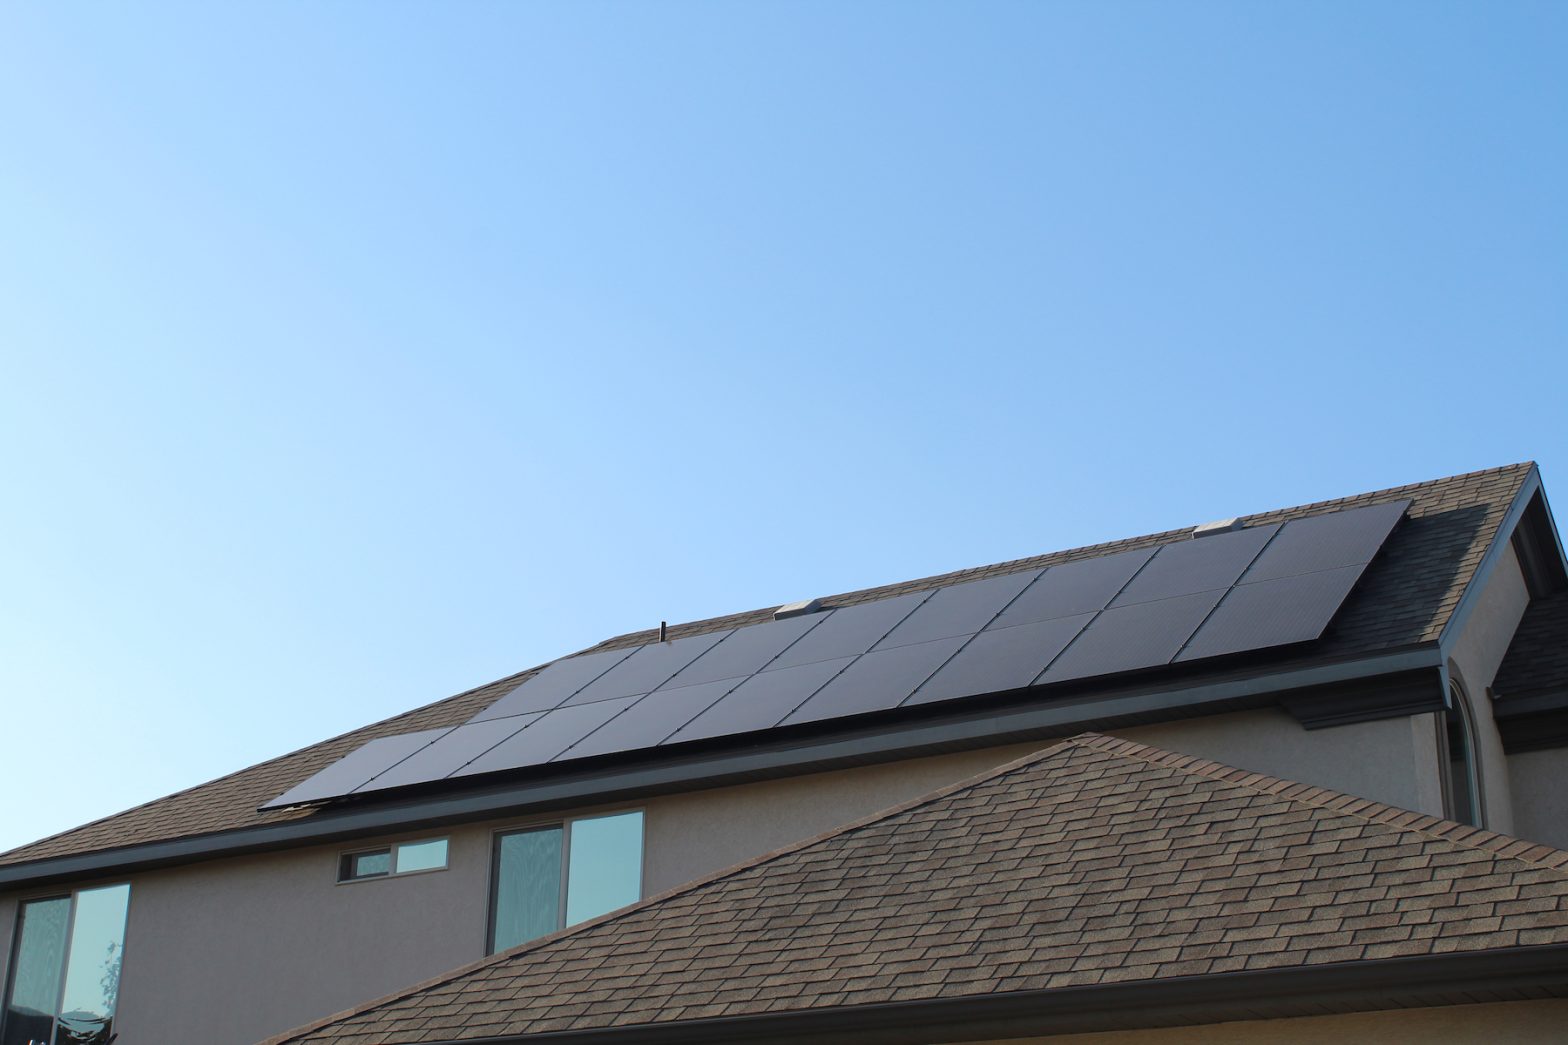 Residential solar installation with black solar panels